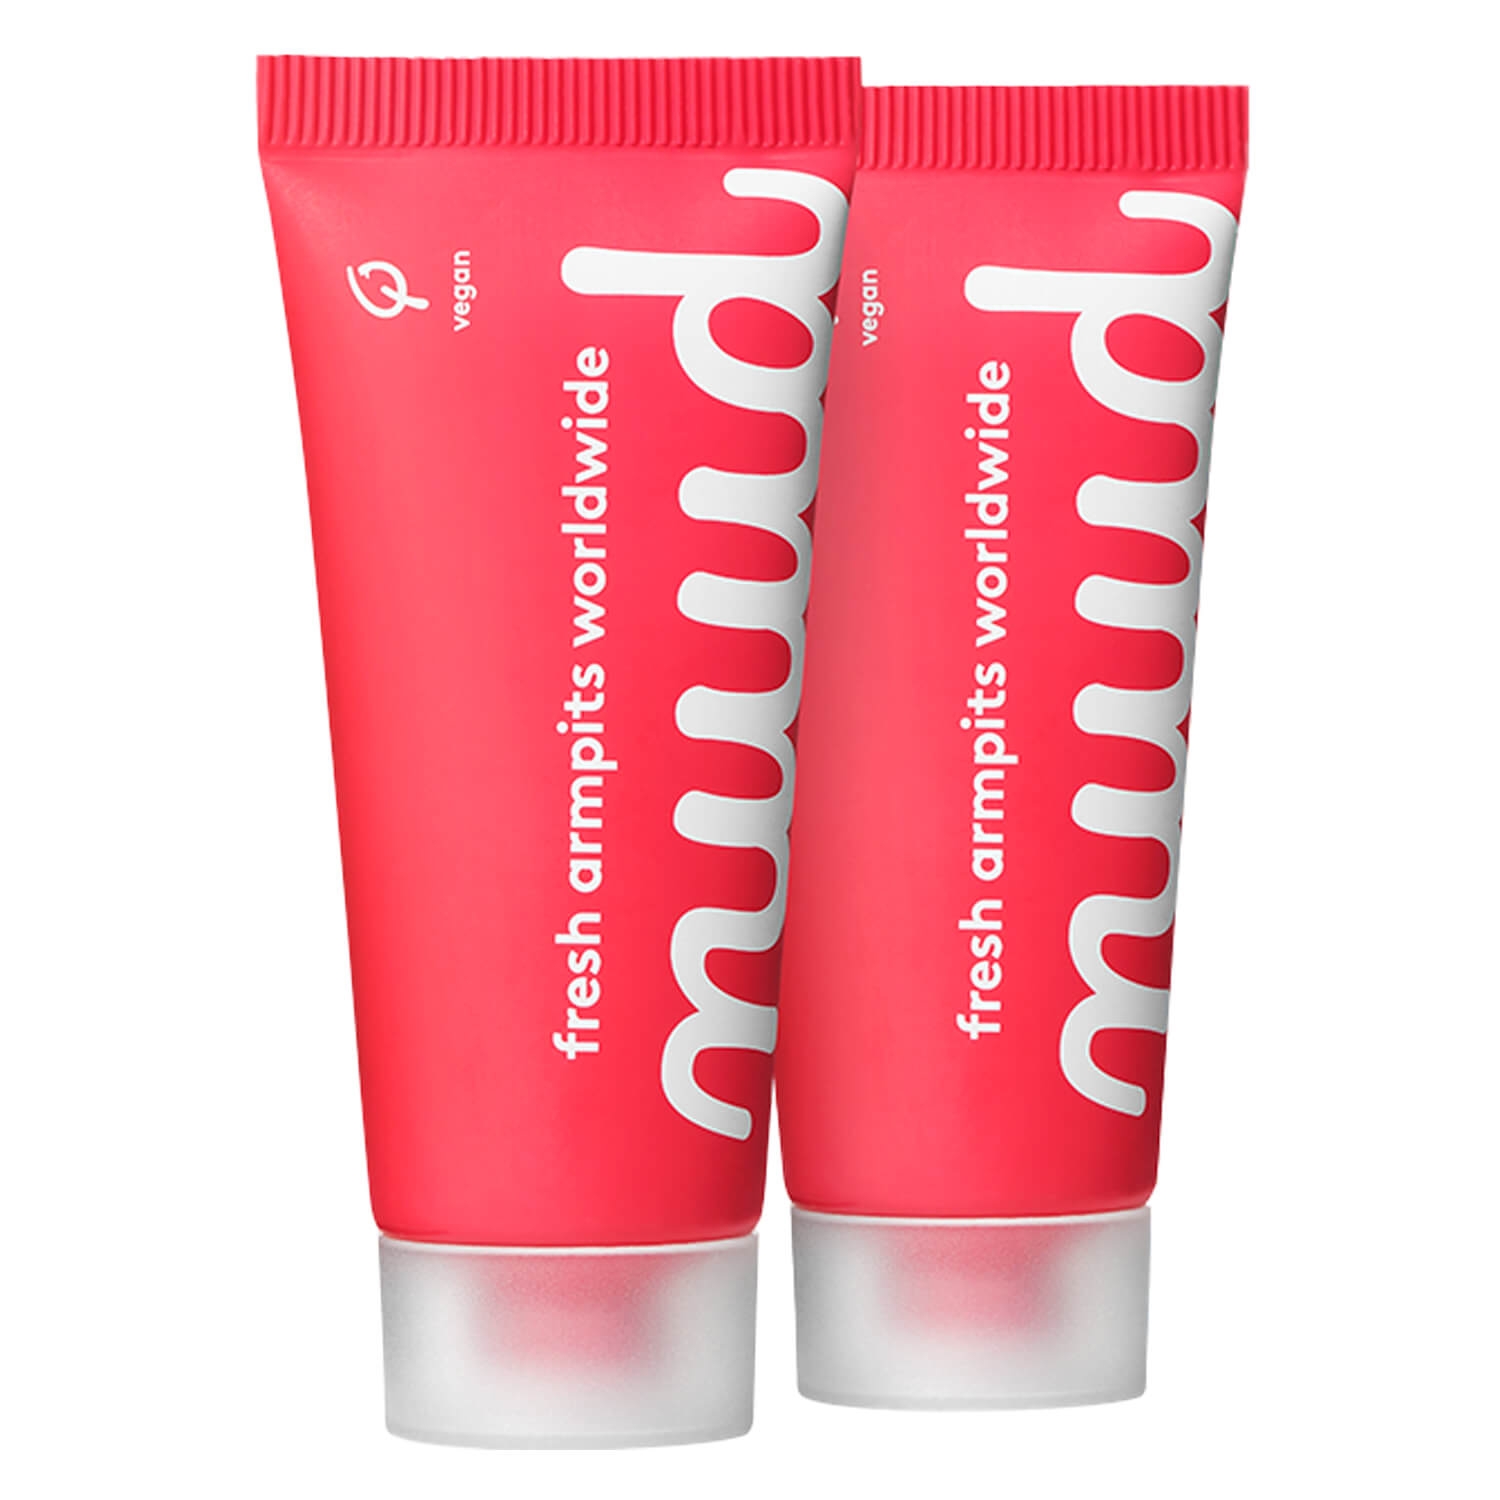 Produktbild von nuud - Deo Smarter Pack pink new formula